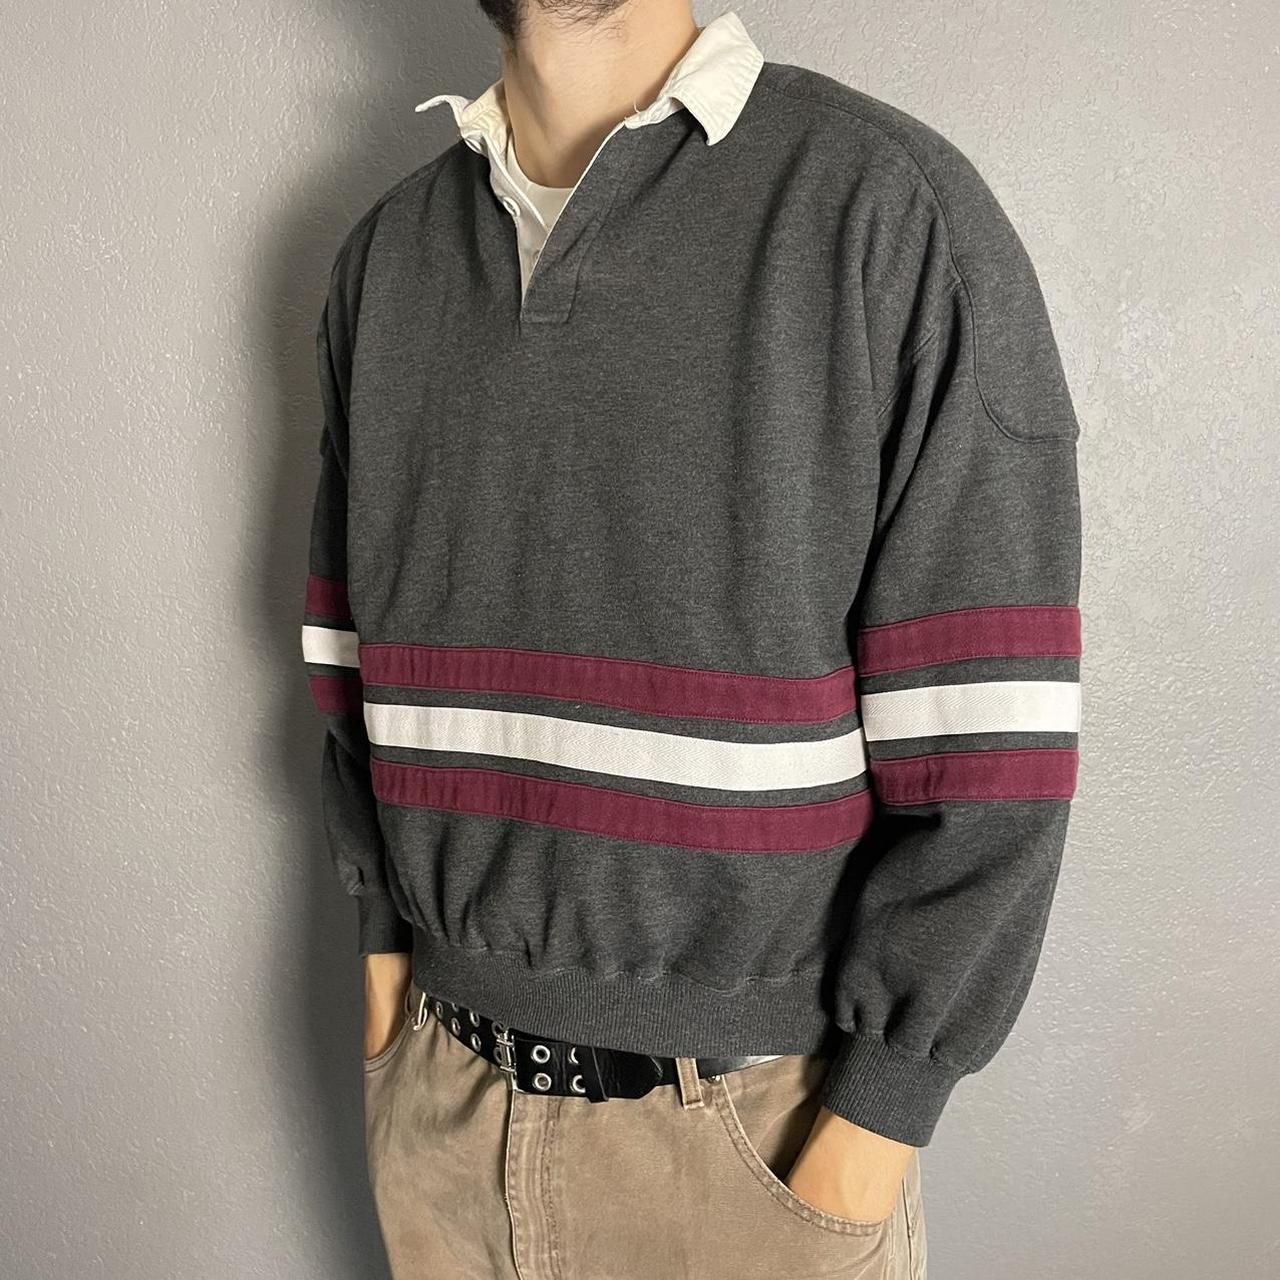 American Vintage Men's Red and Grey Sweatshirt